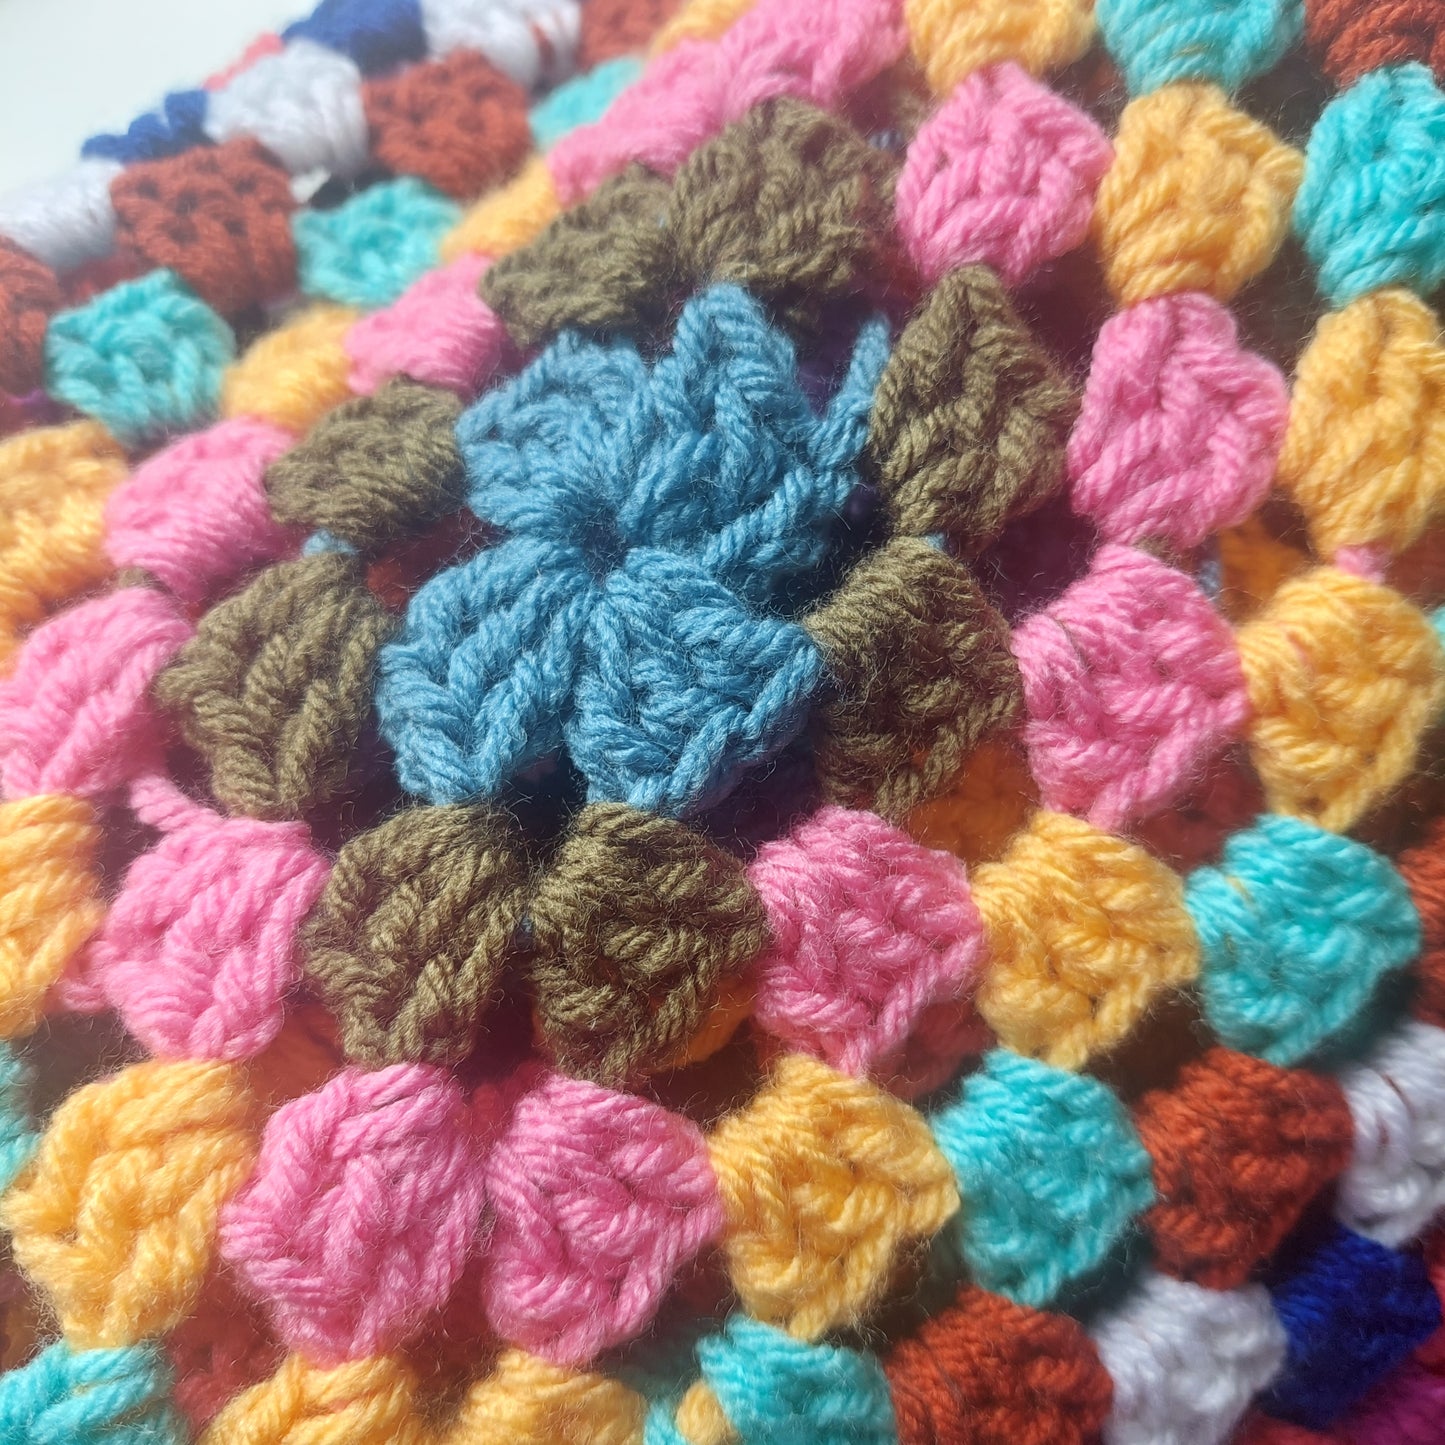 Large Random Crochet Granny Square Blanket - No 1